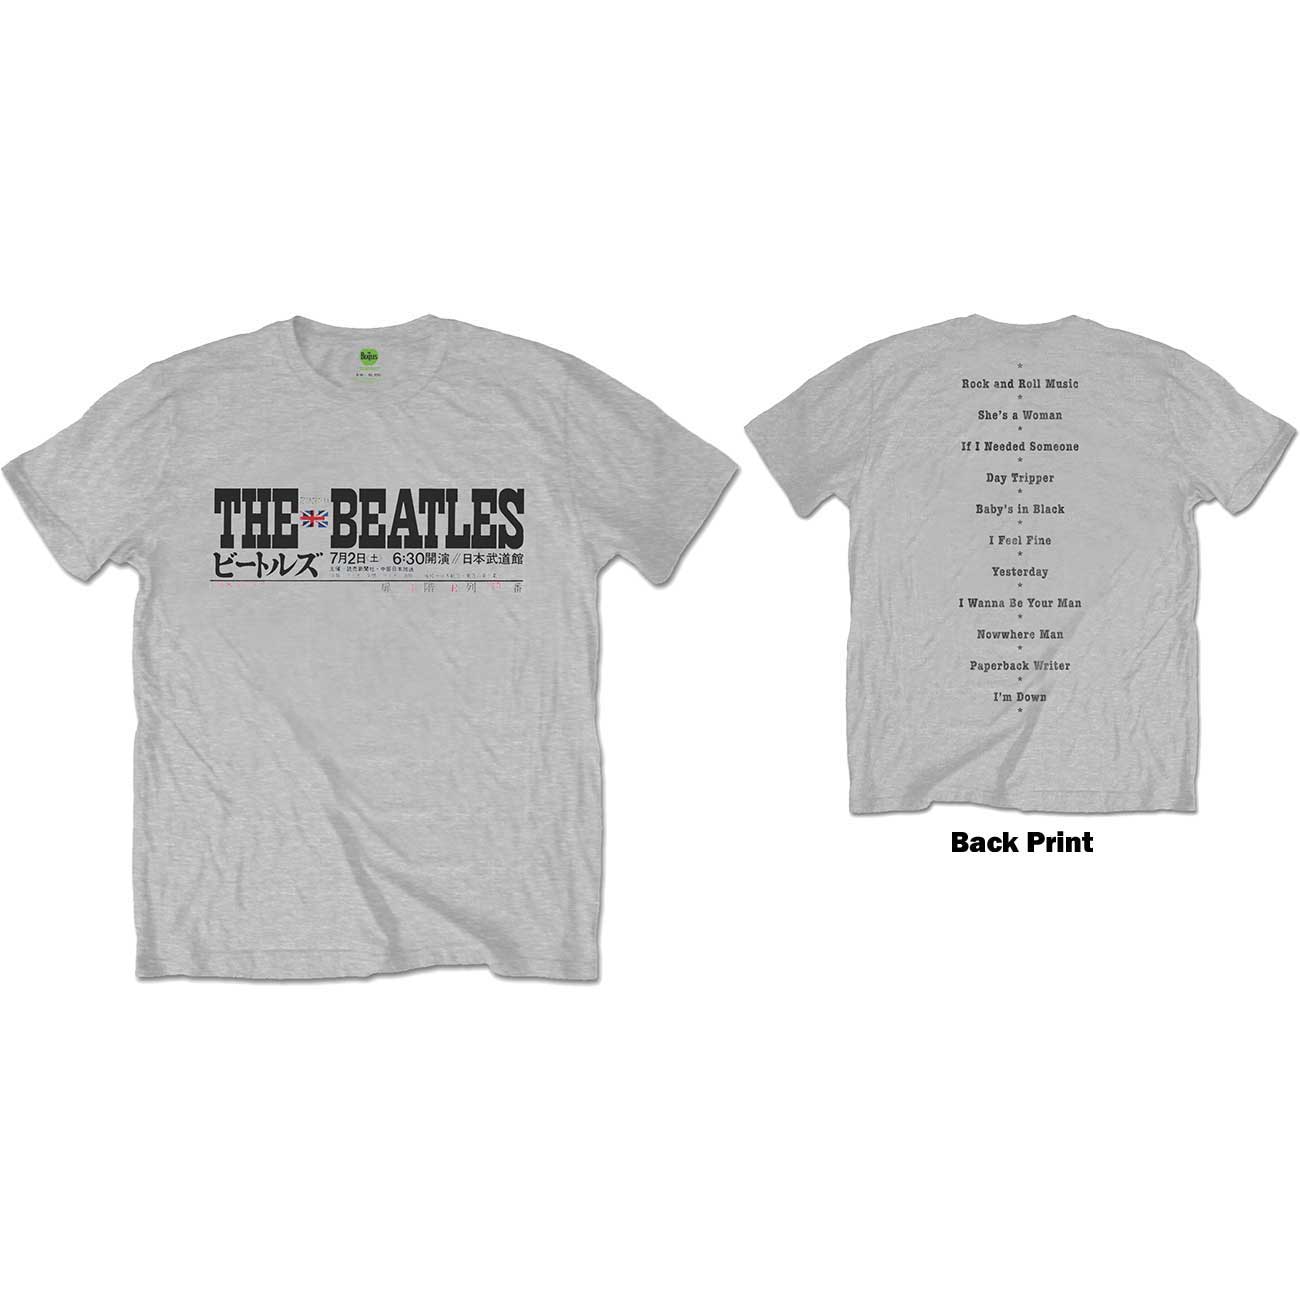 The Beatles Unisex T-Shirt: Budokan Set List (Back Print)